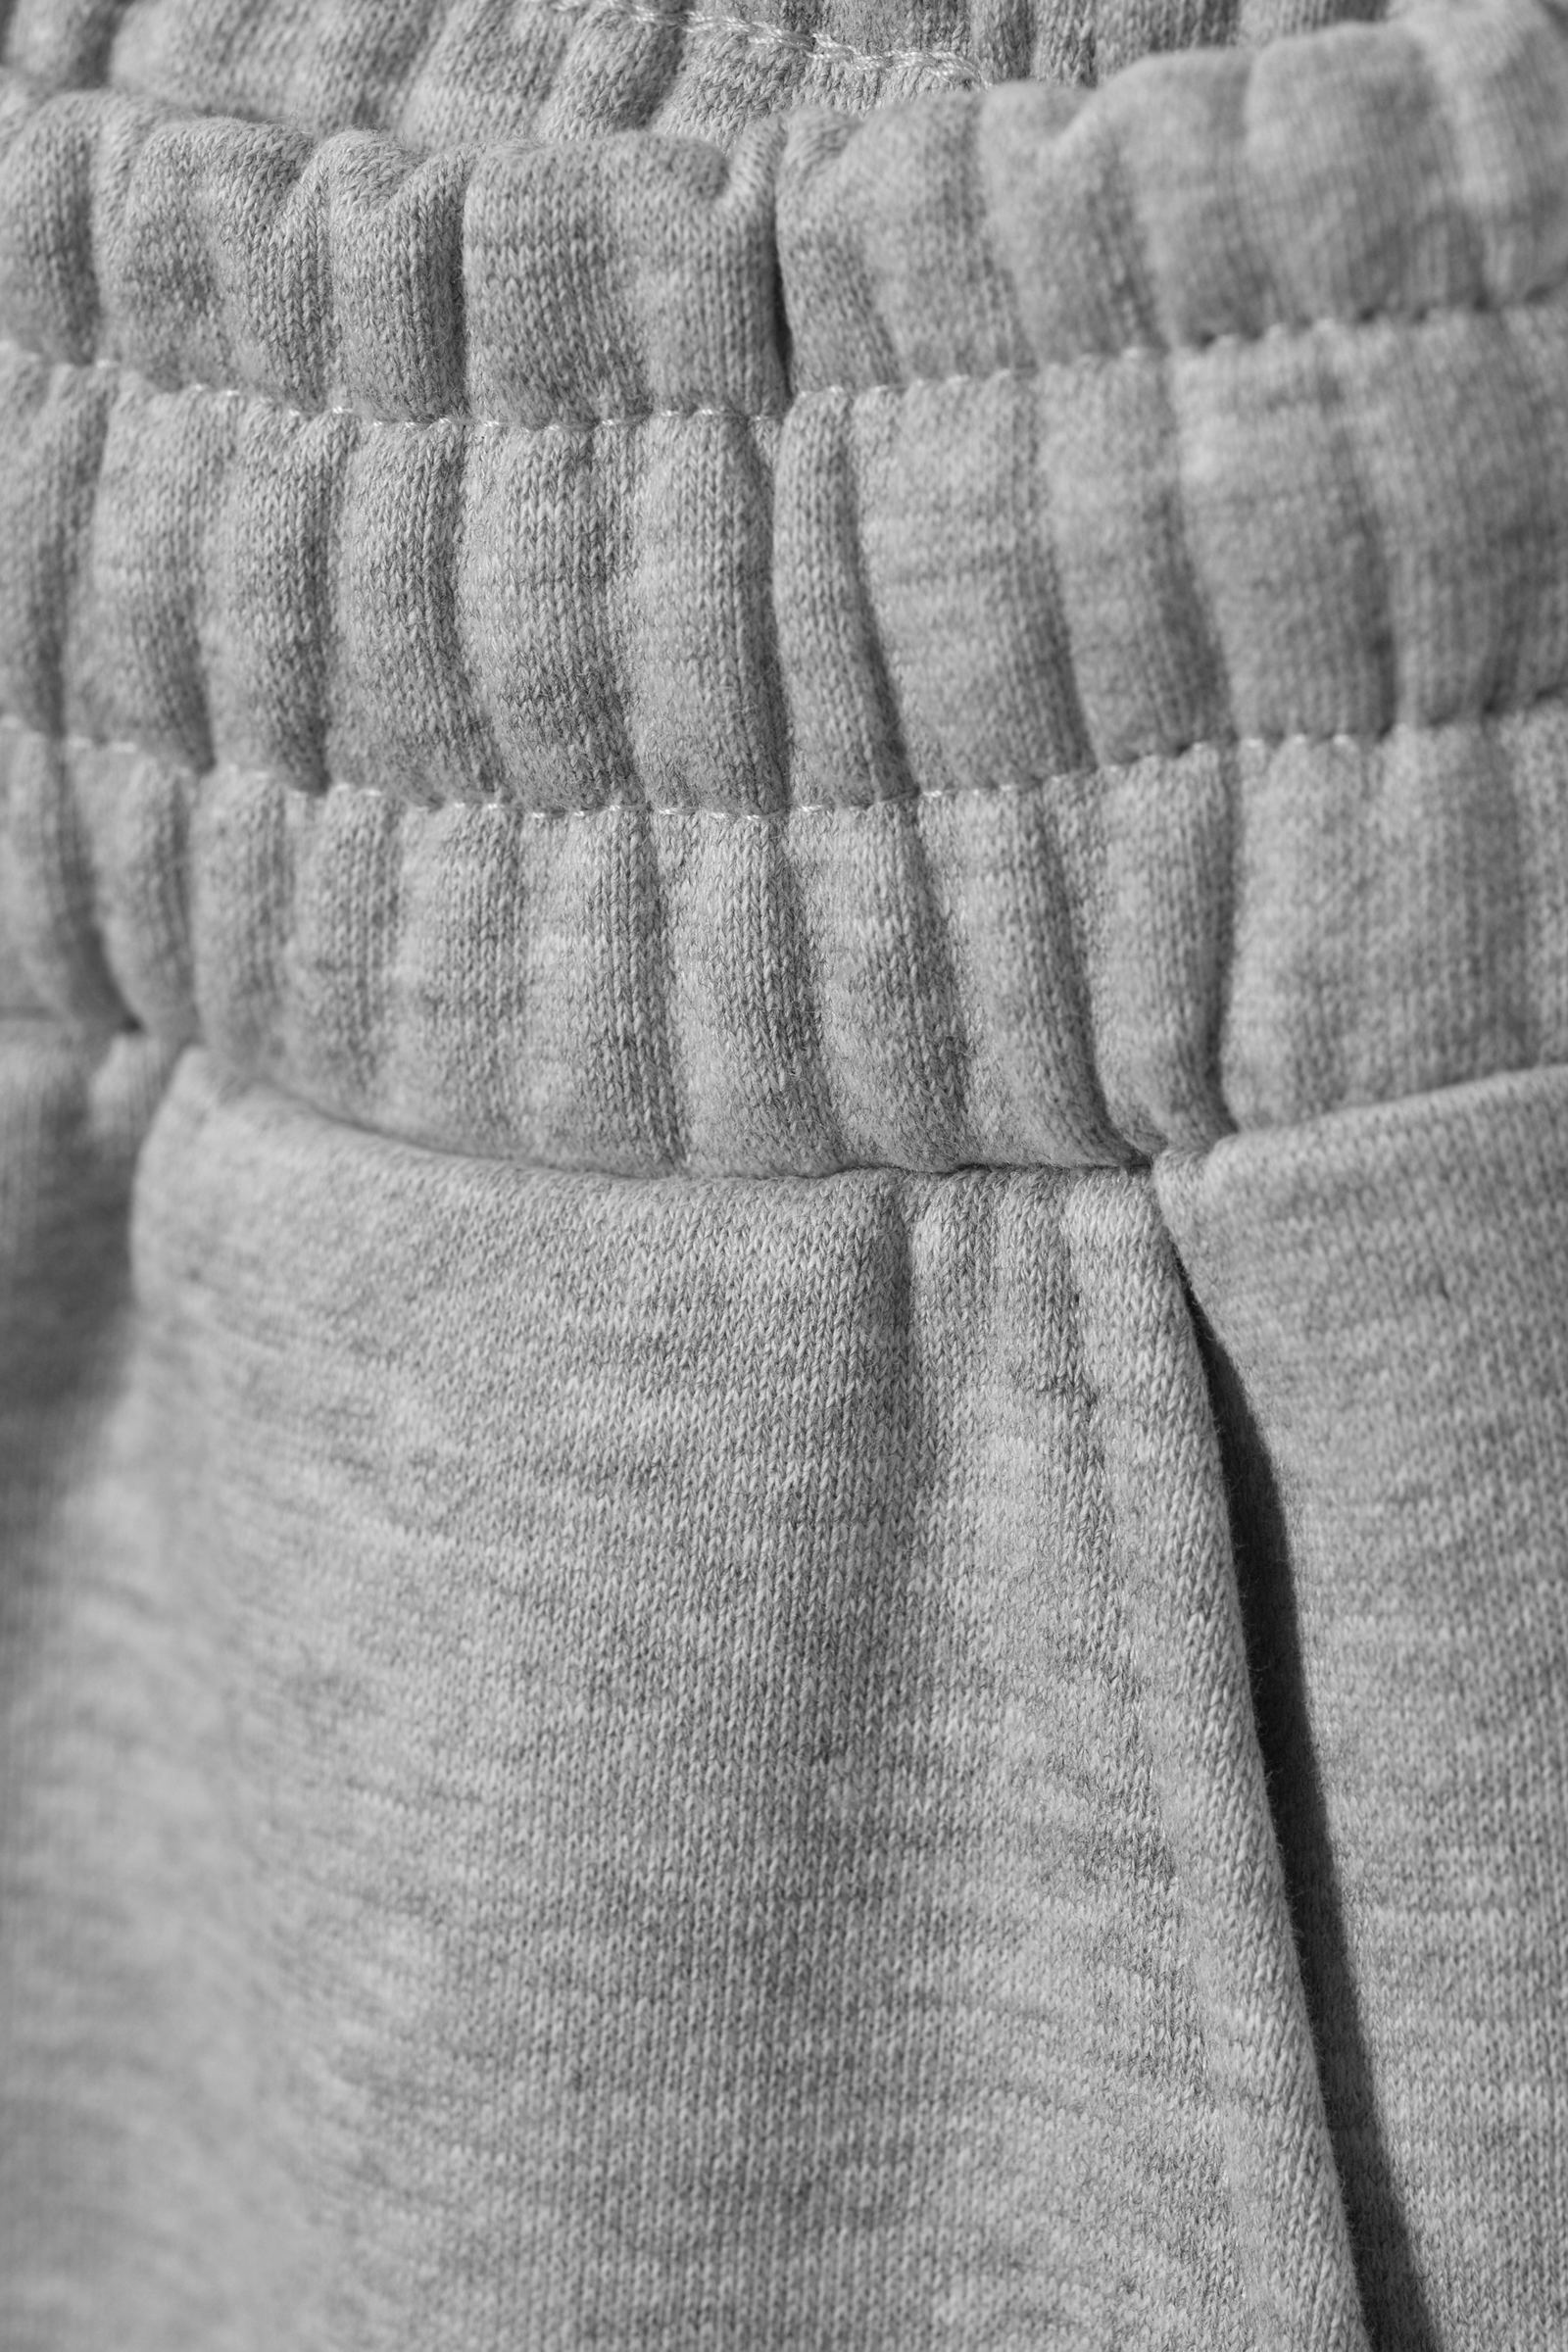 Standard Sweatpants - Light Grey - Weekday